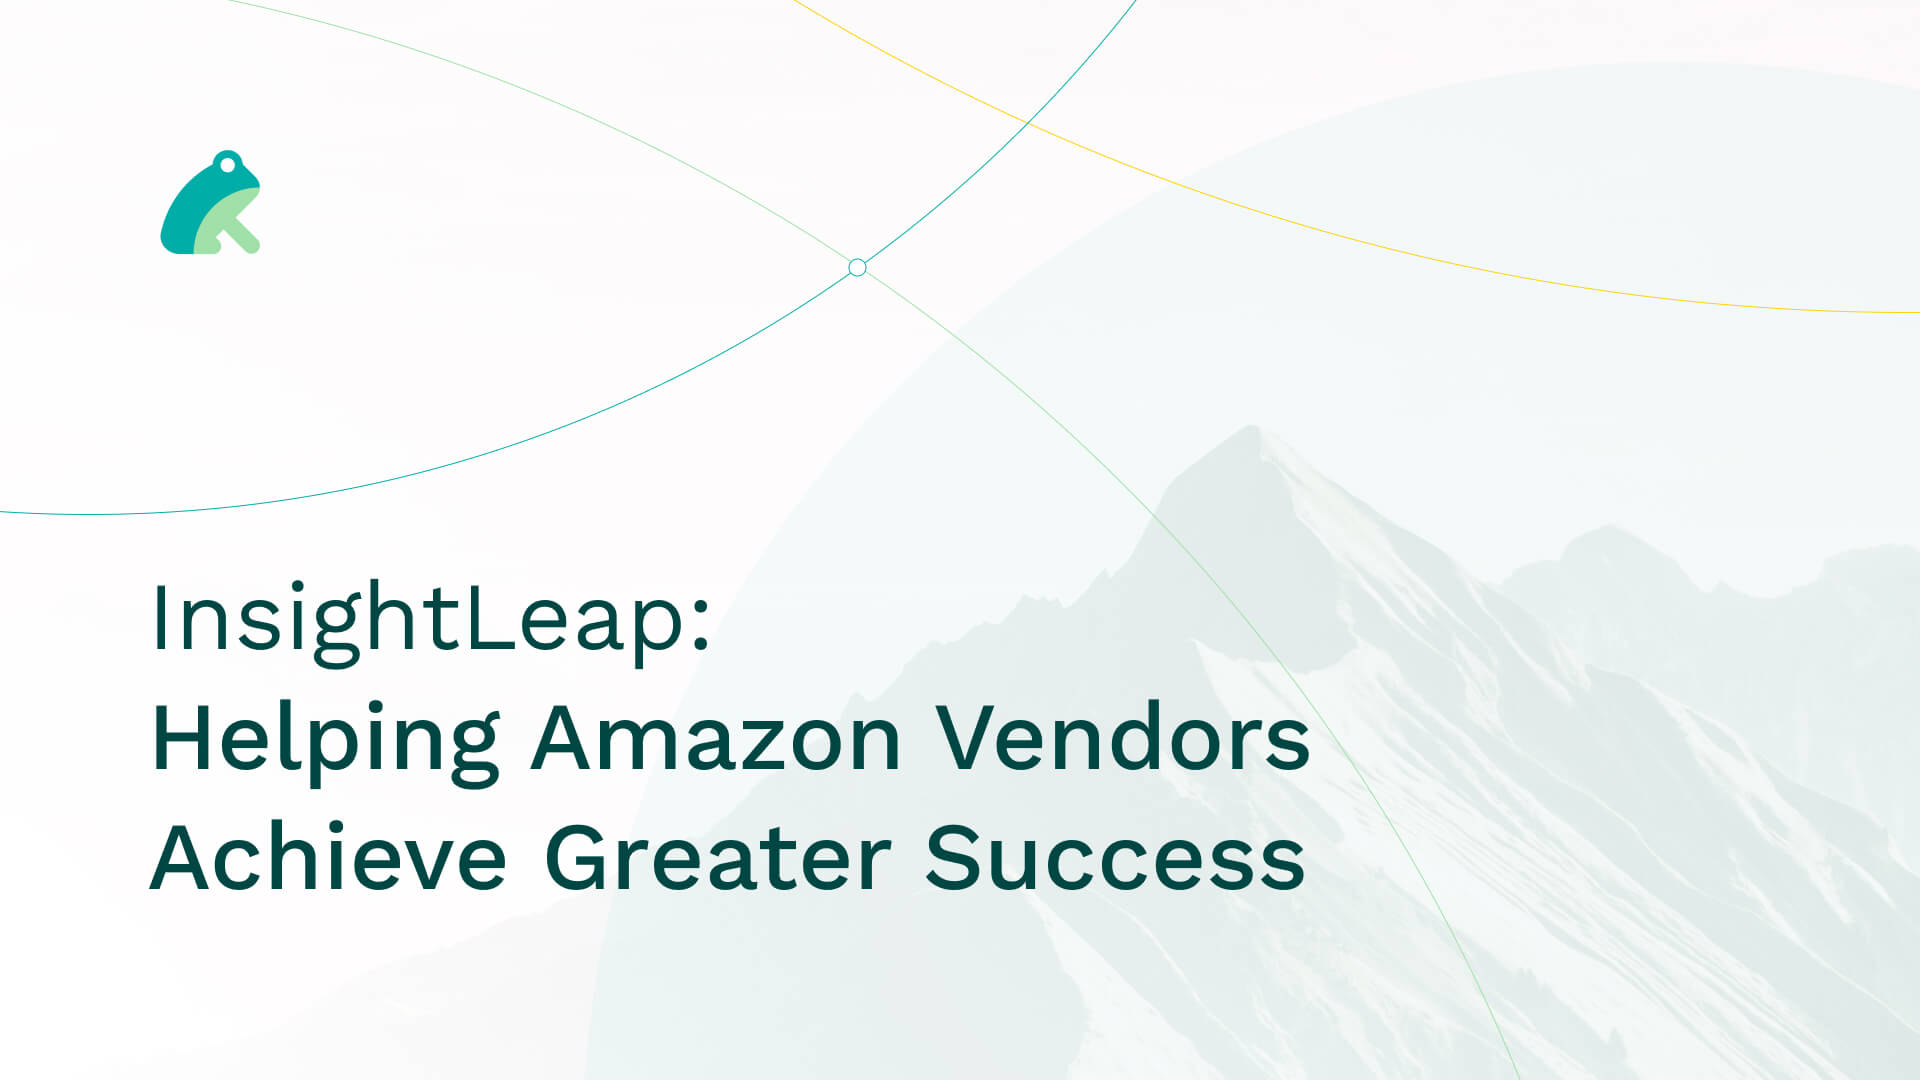 InsightLeap: Helping Amazon Vendors Achieve Greater Success